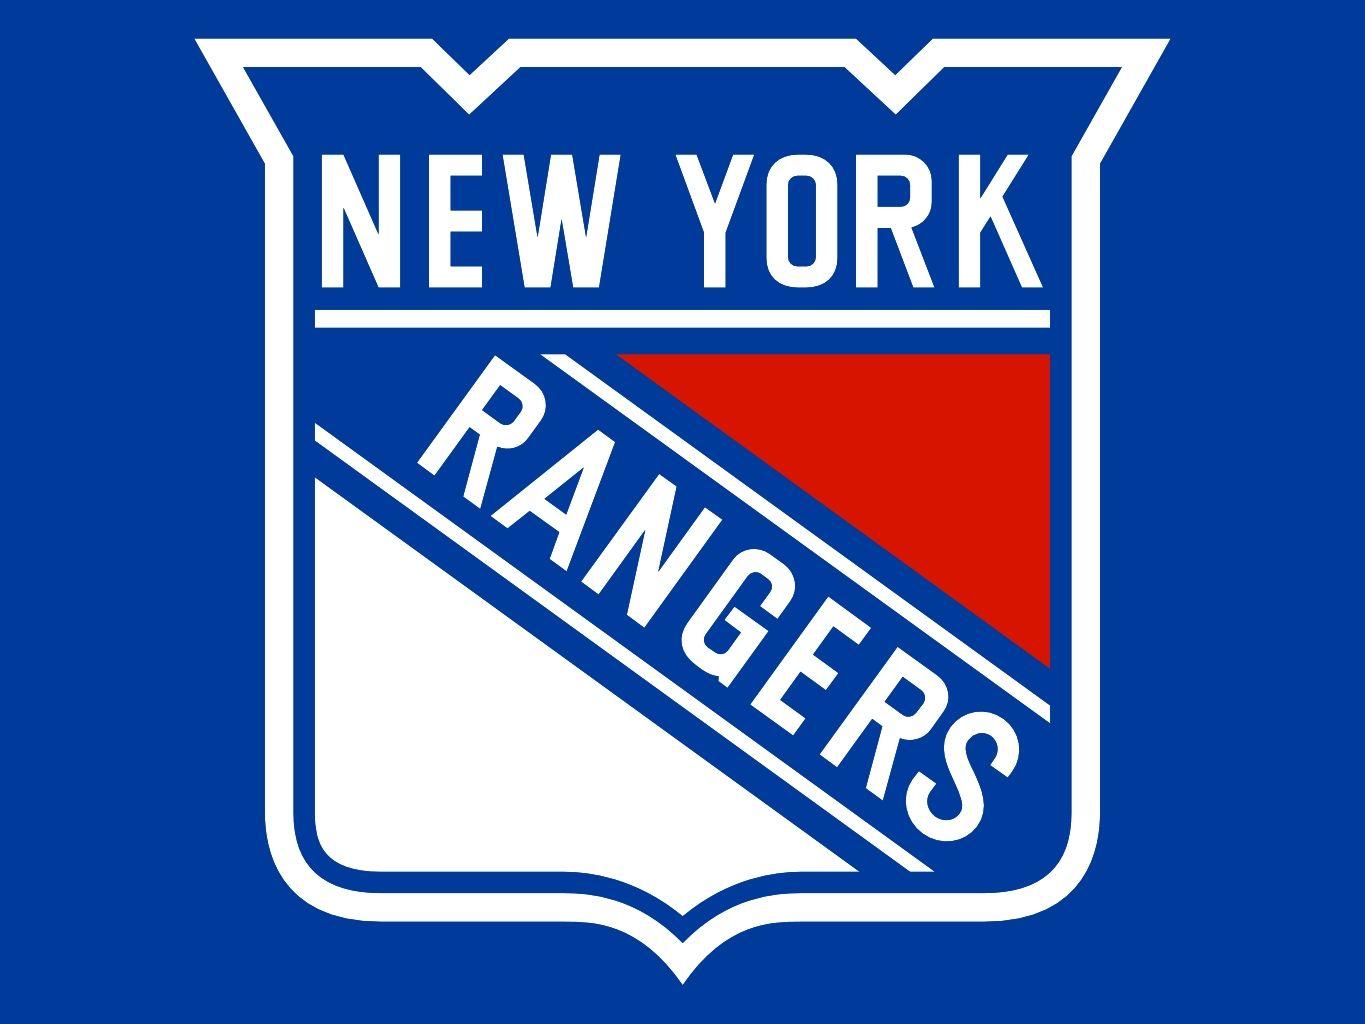 New York Rangers Logo - Pin by Dwayne Holloway on Sports | New York Rangers, New york ...